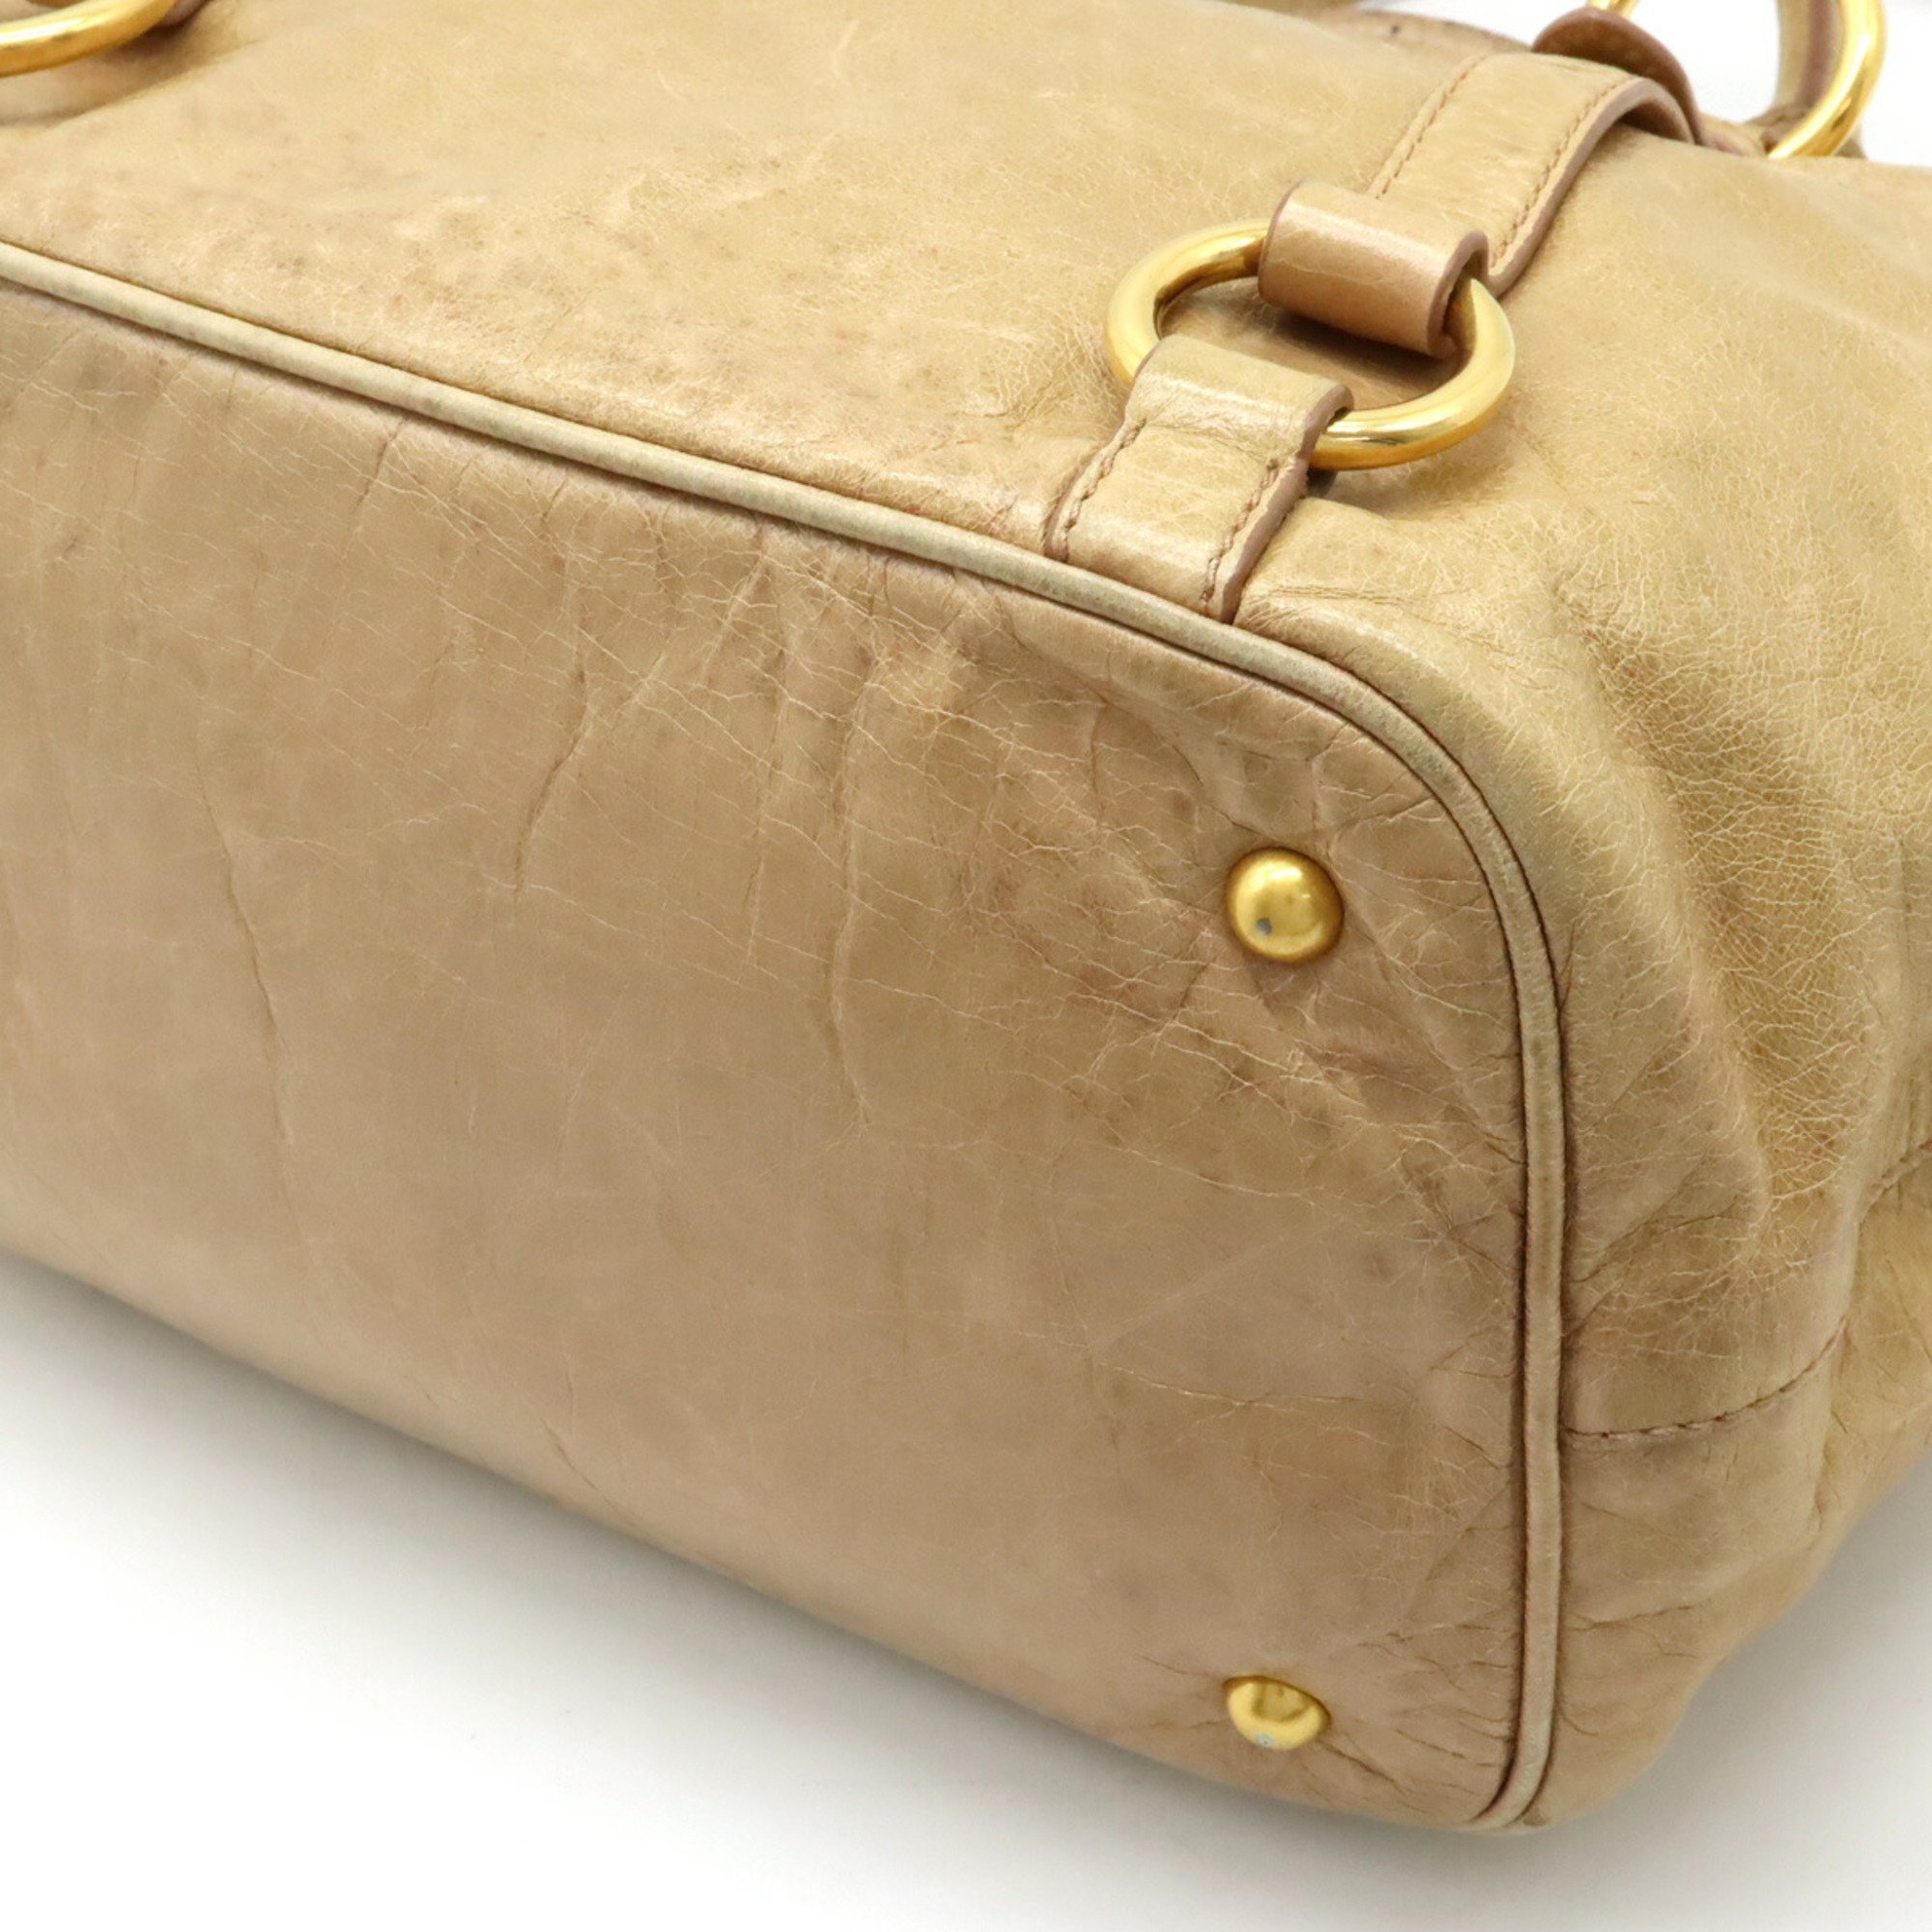 Miu Miu Miu Handbag Tote Bag Leather Beige RN0685